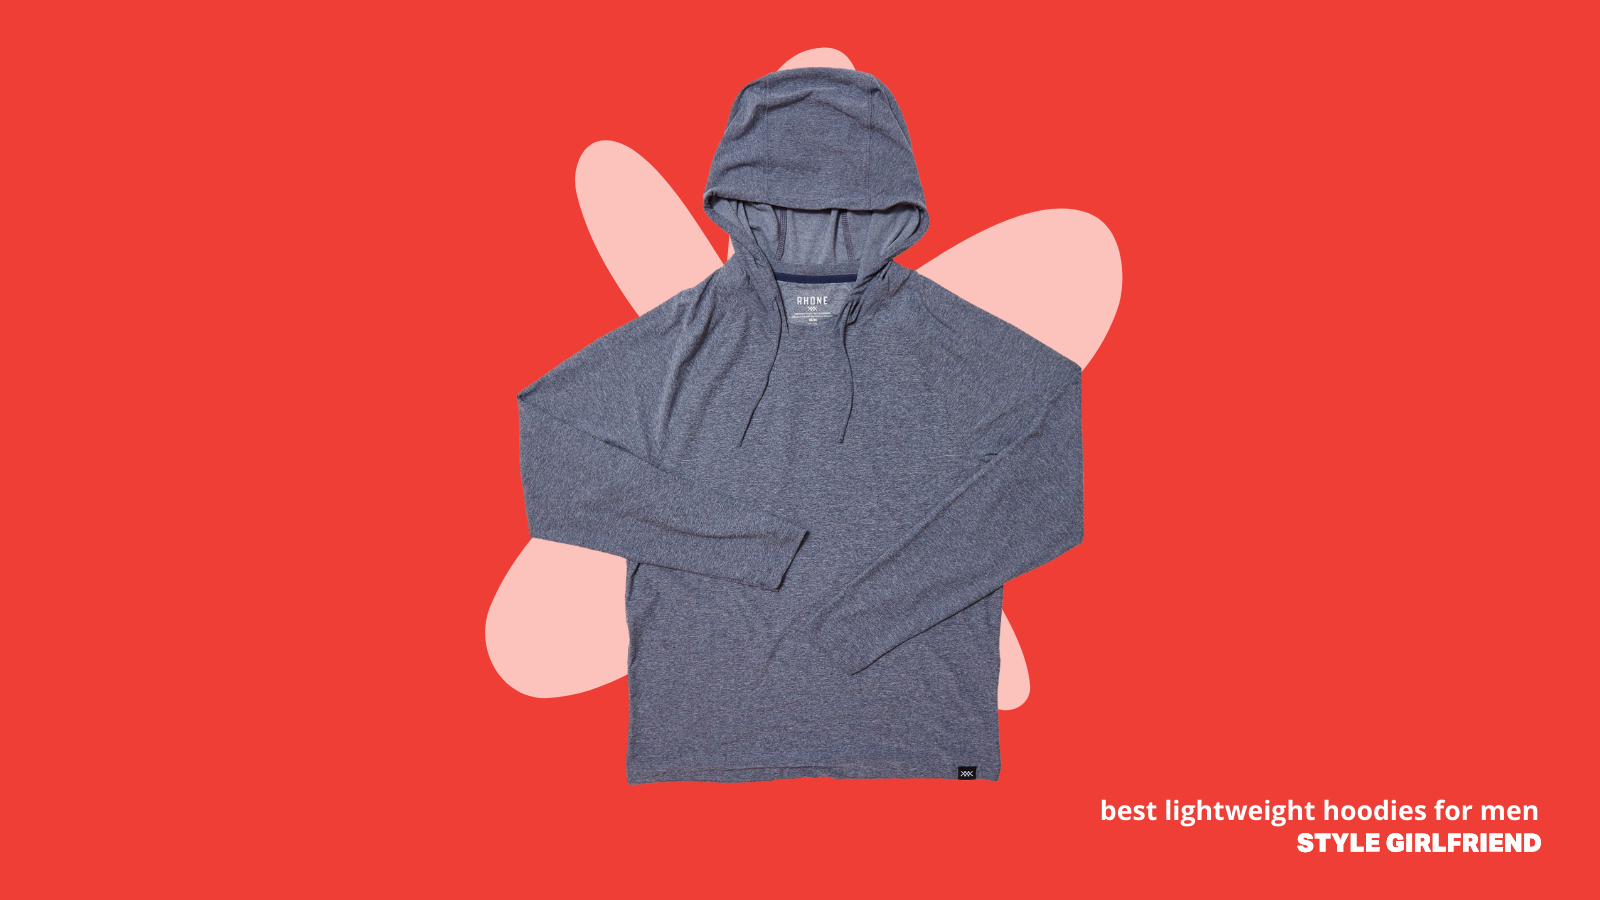 Rhone lightweight hoodies